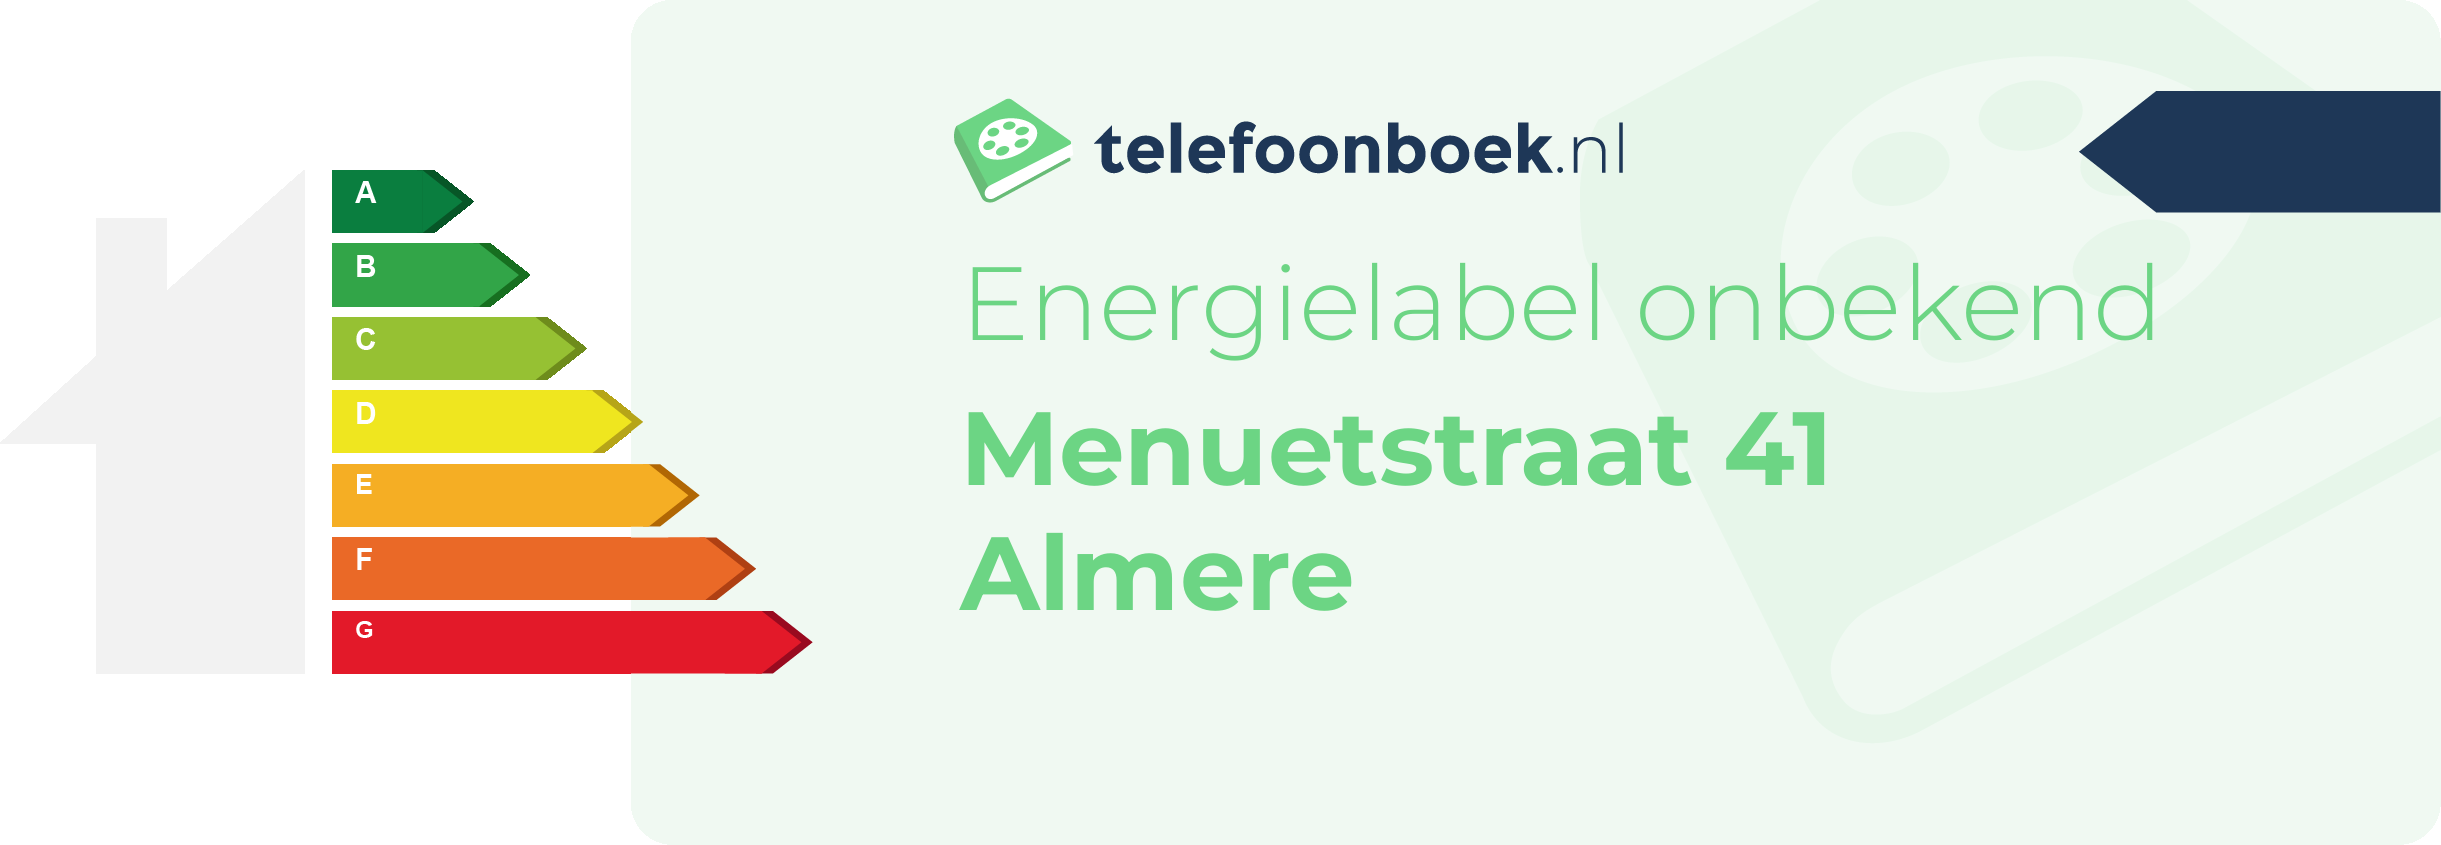 Energielabel Menuetstraat 41 Almere